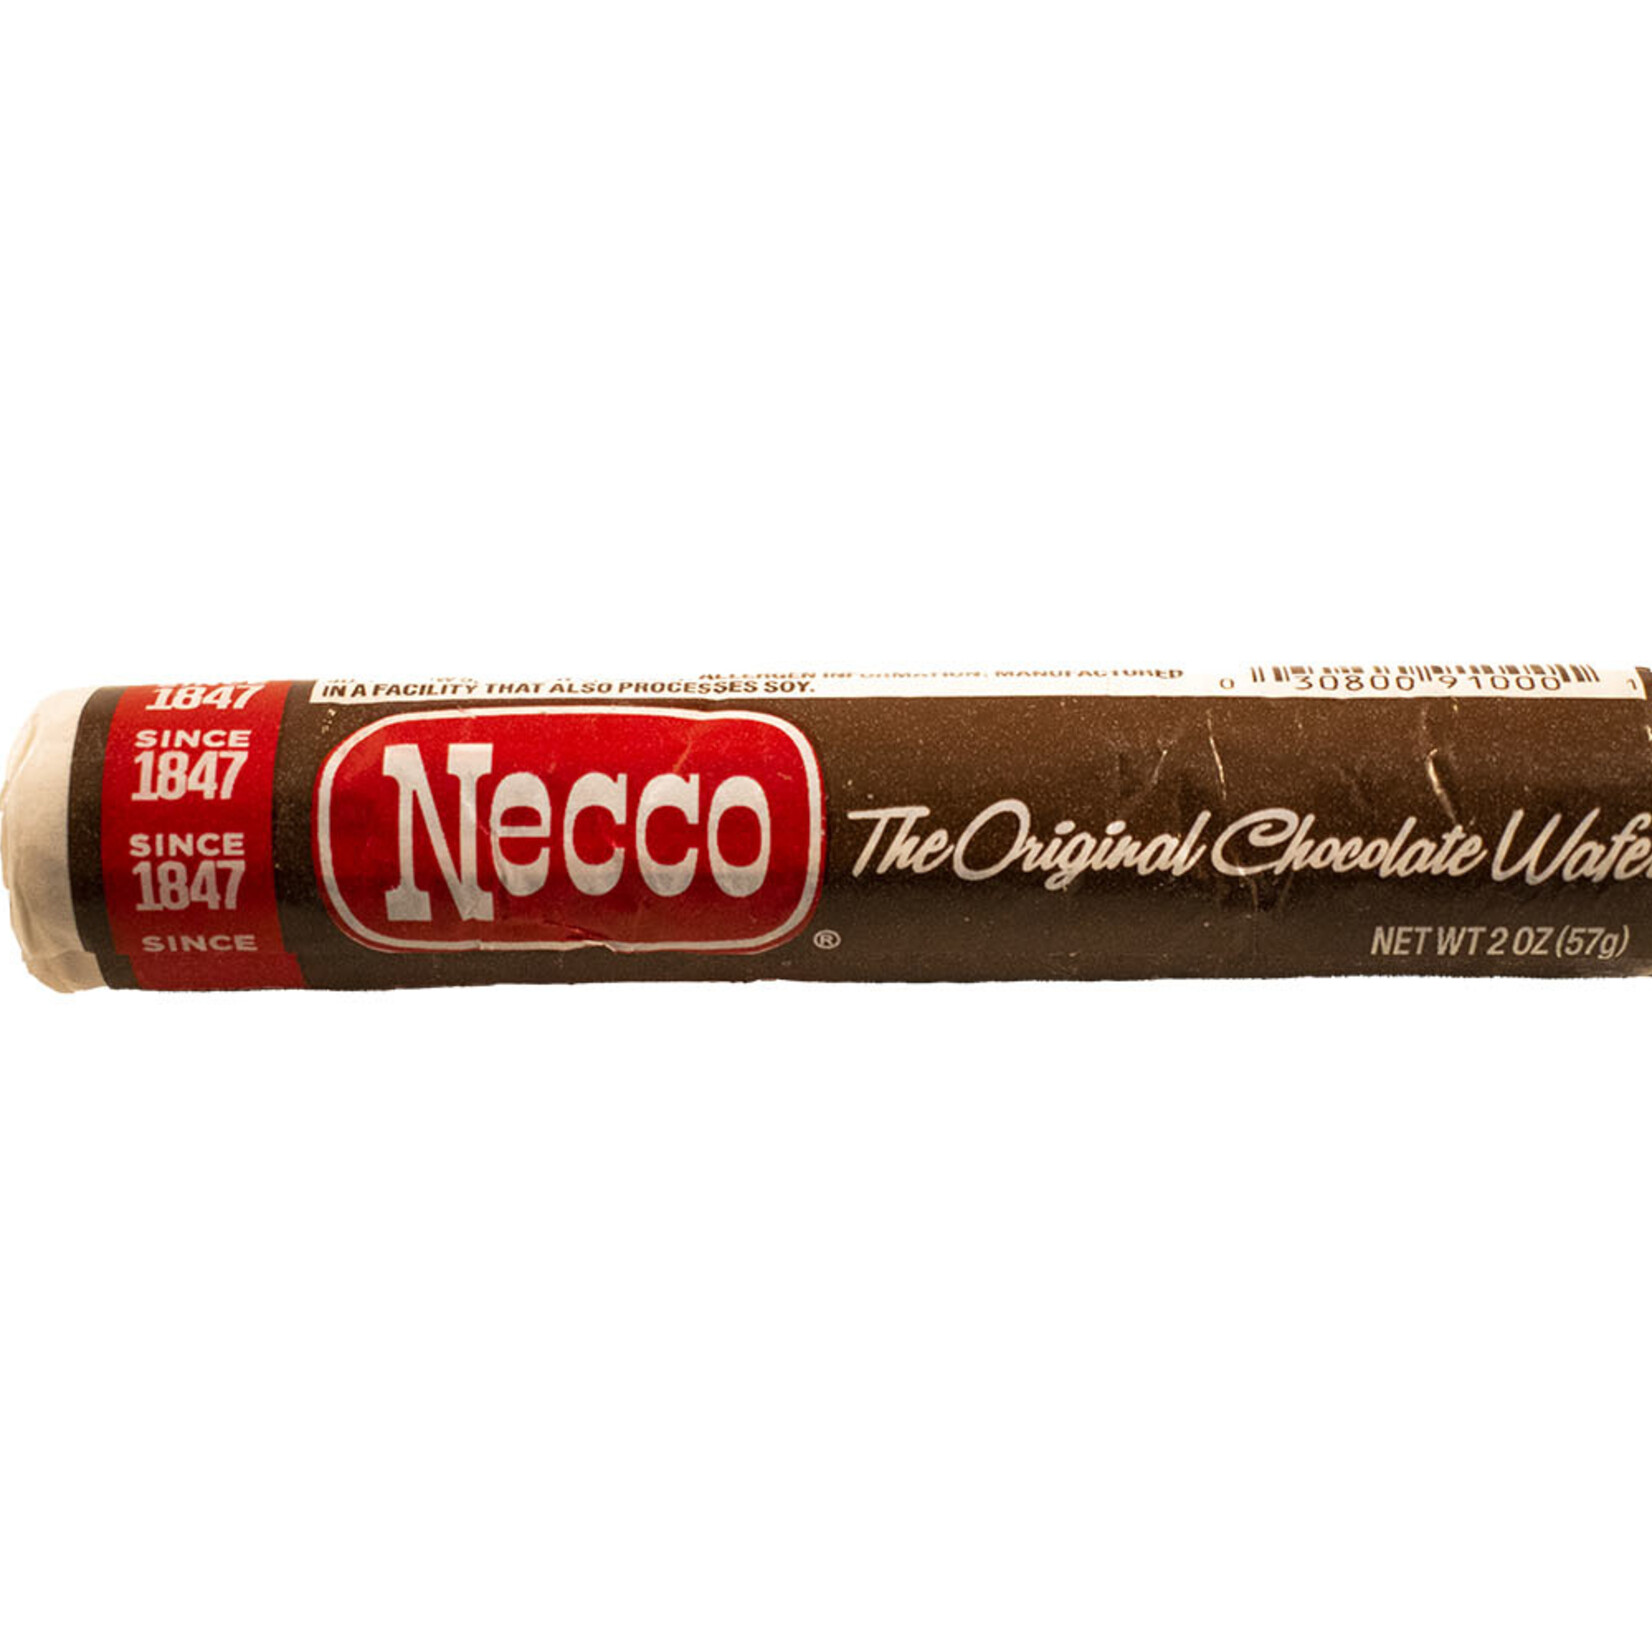 Necco chocolate wafer